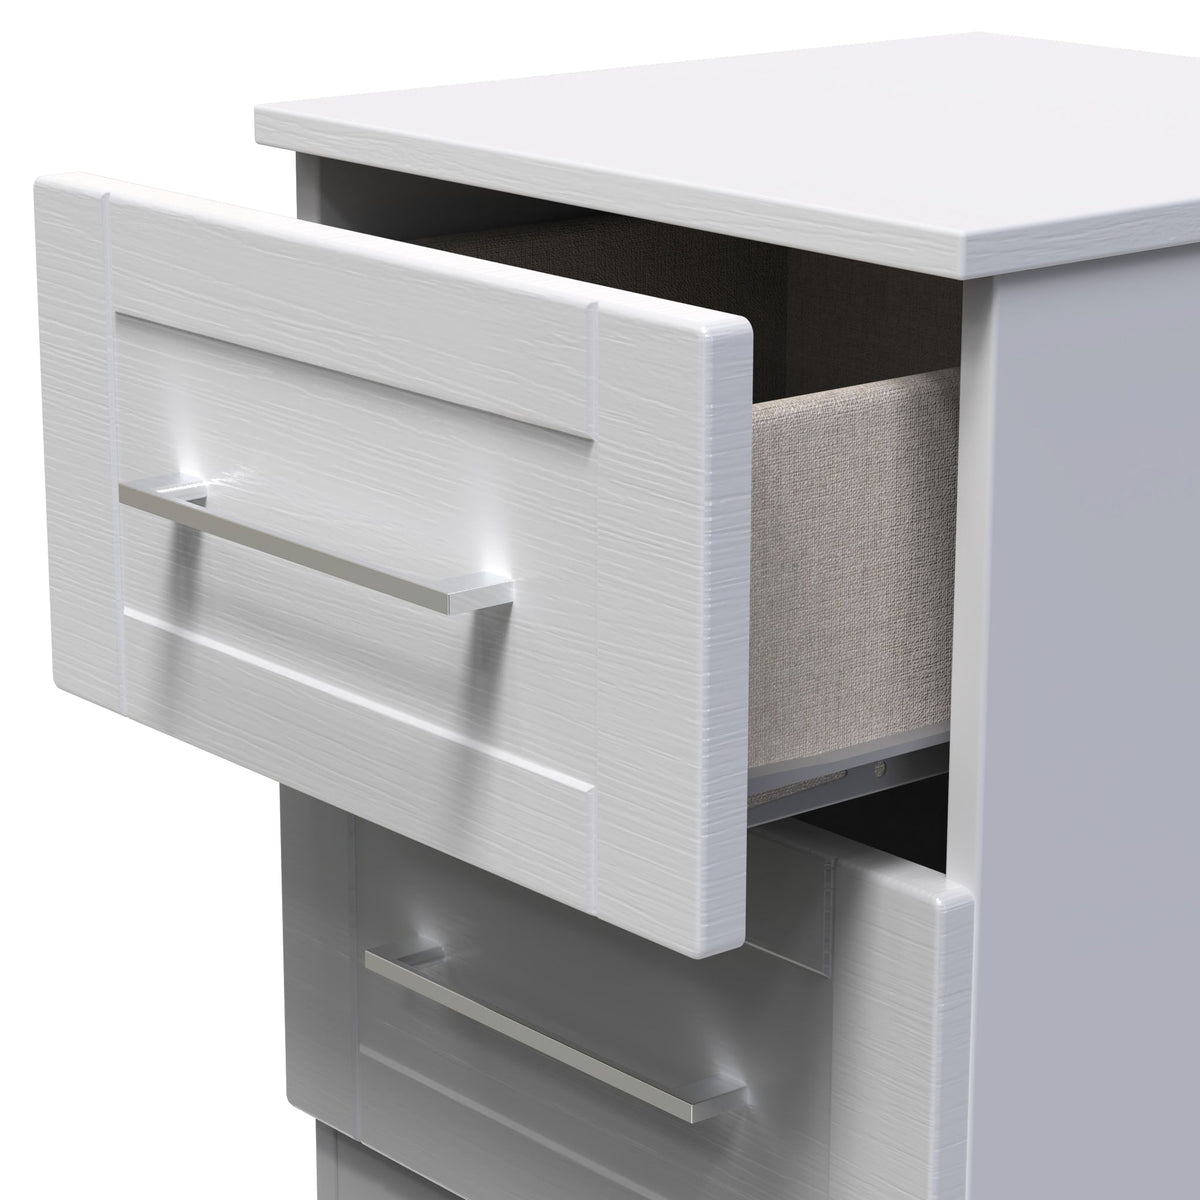 Bellamy Grey Ash 2 Drawer Bedside Table Cabinet from Roseland Furniture